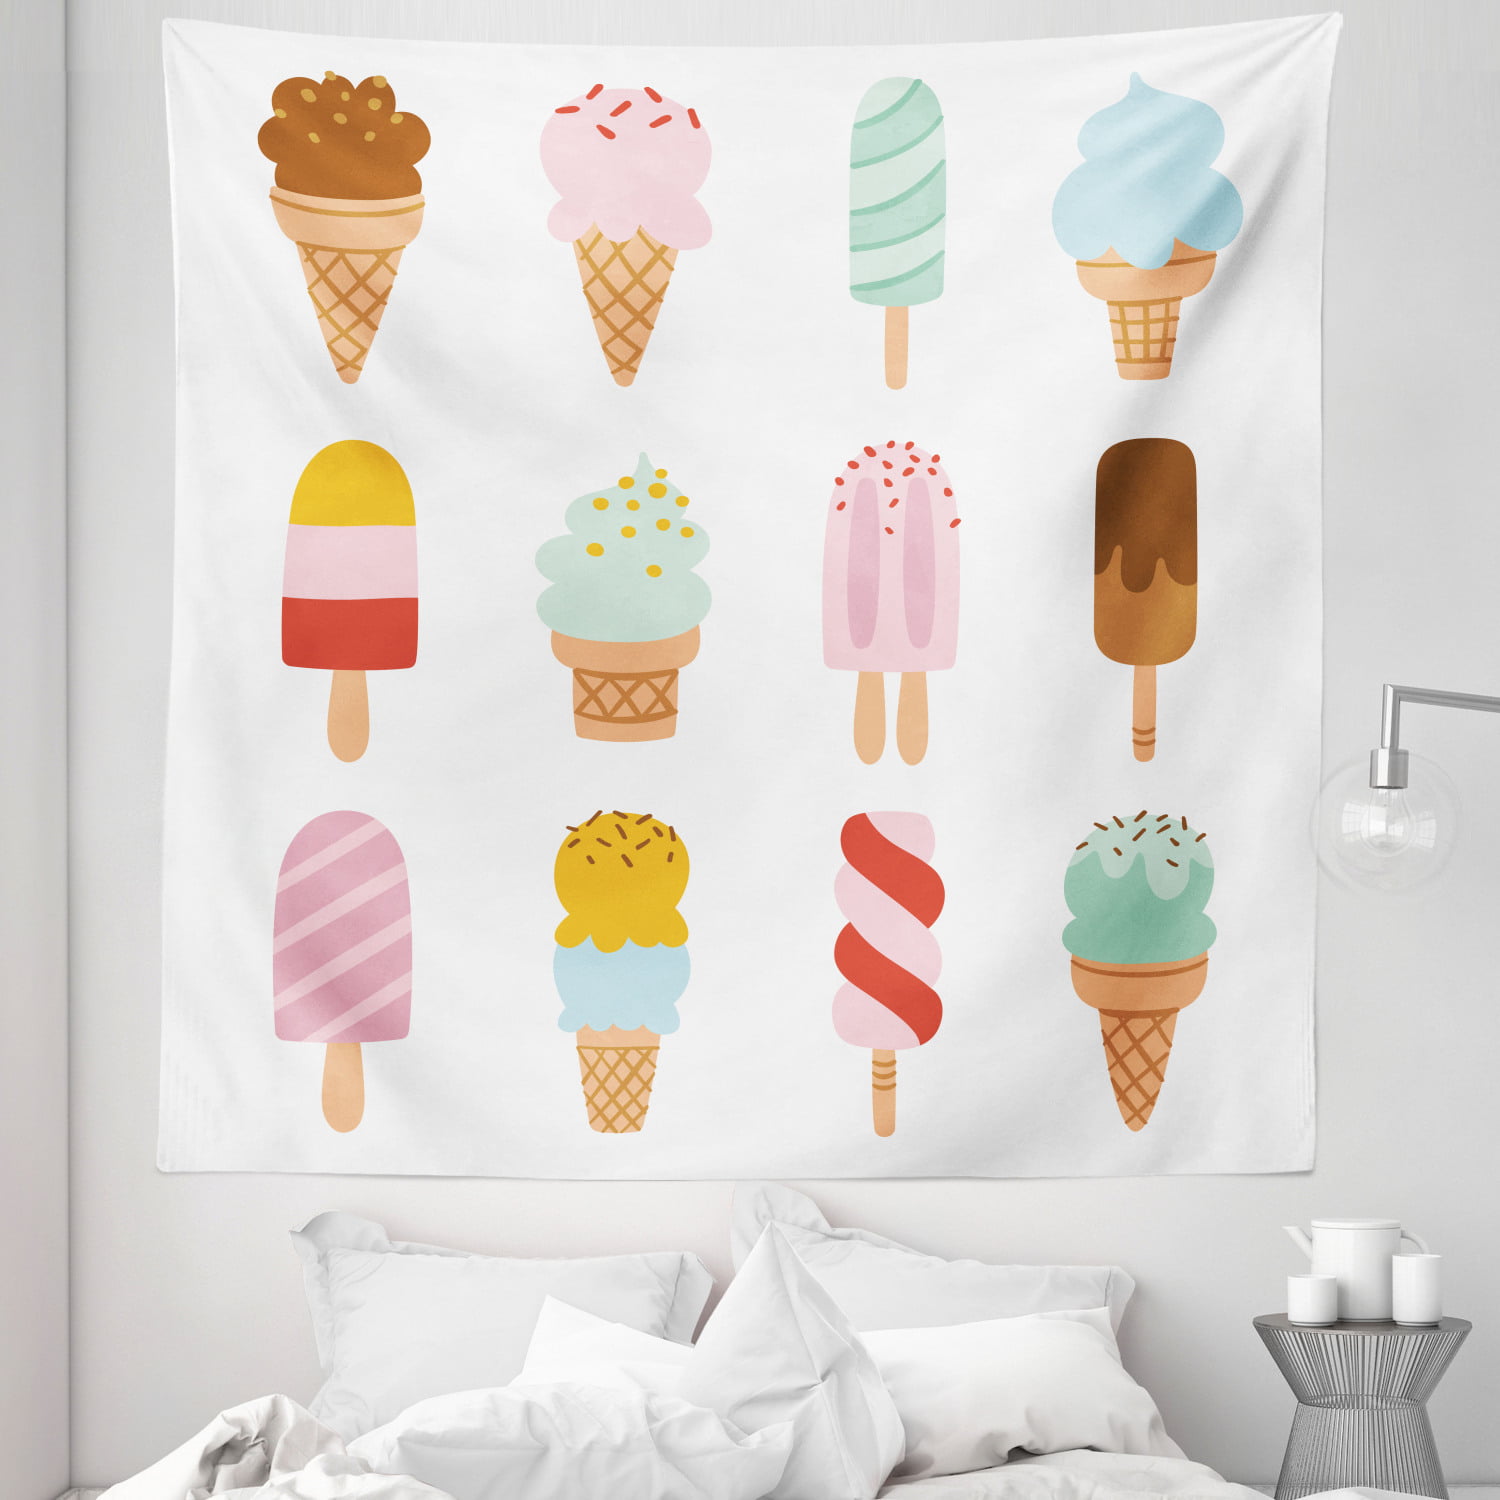 Walls yogurt ice cream